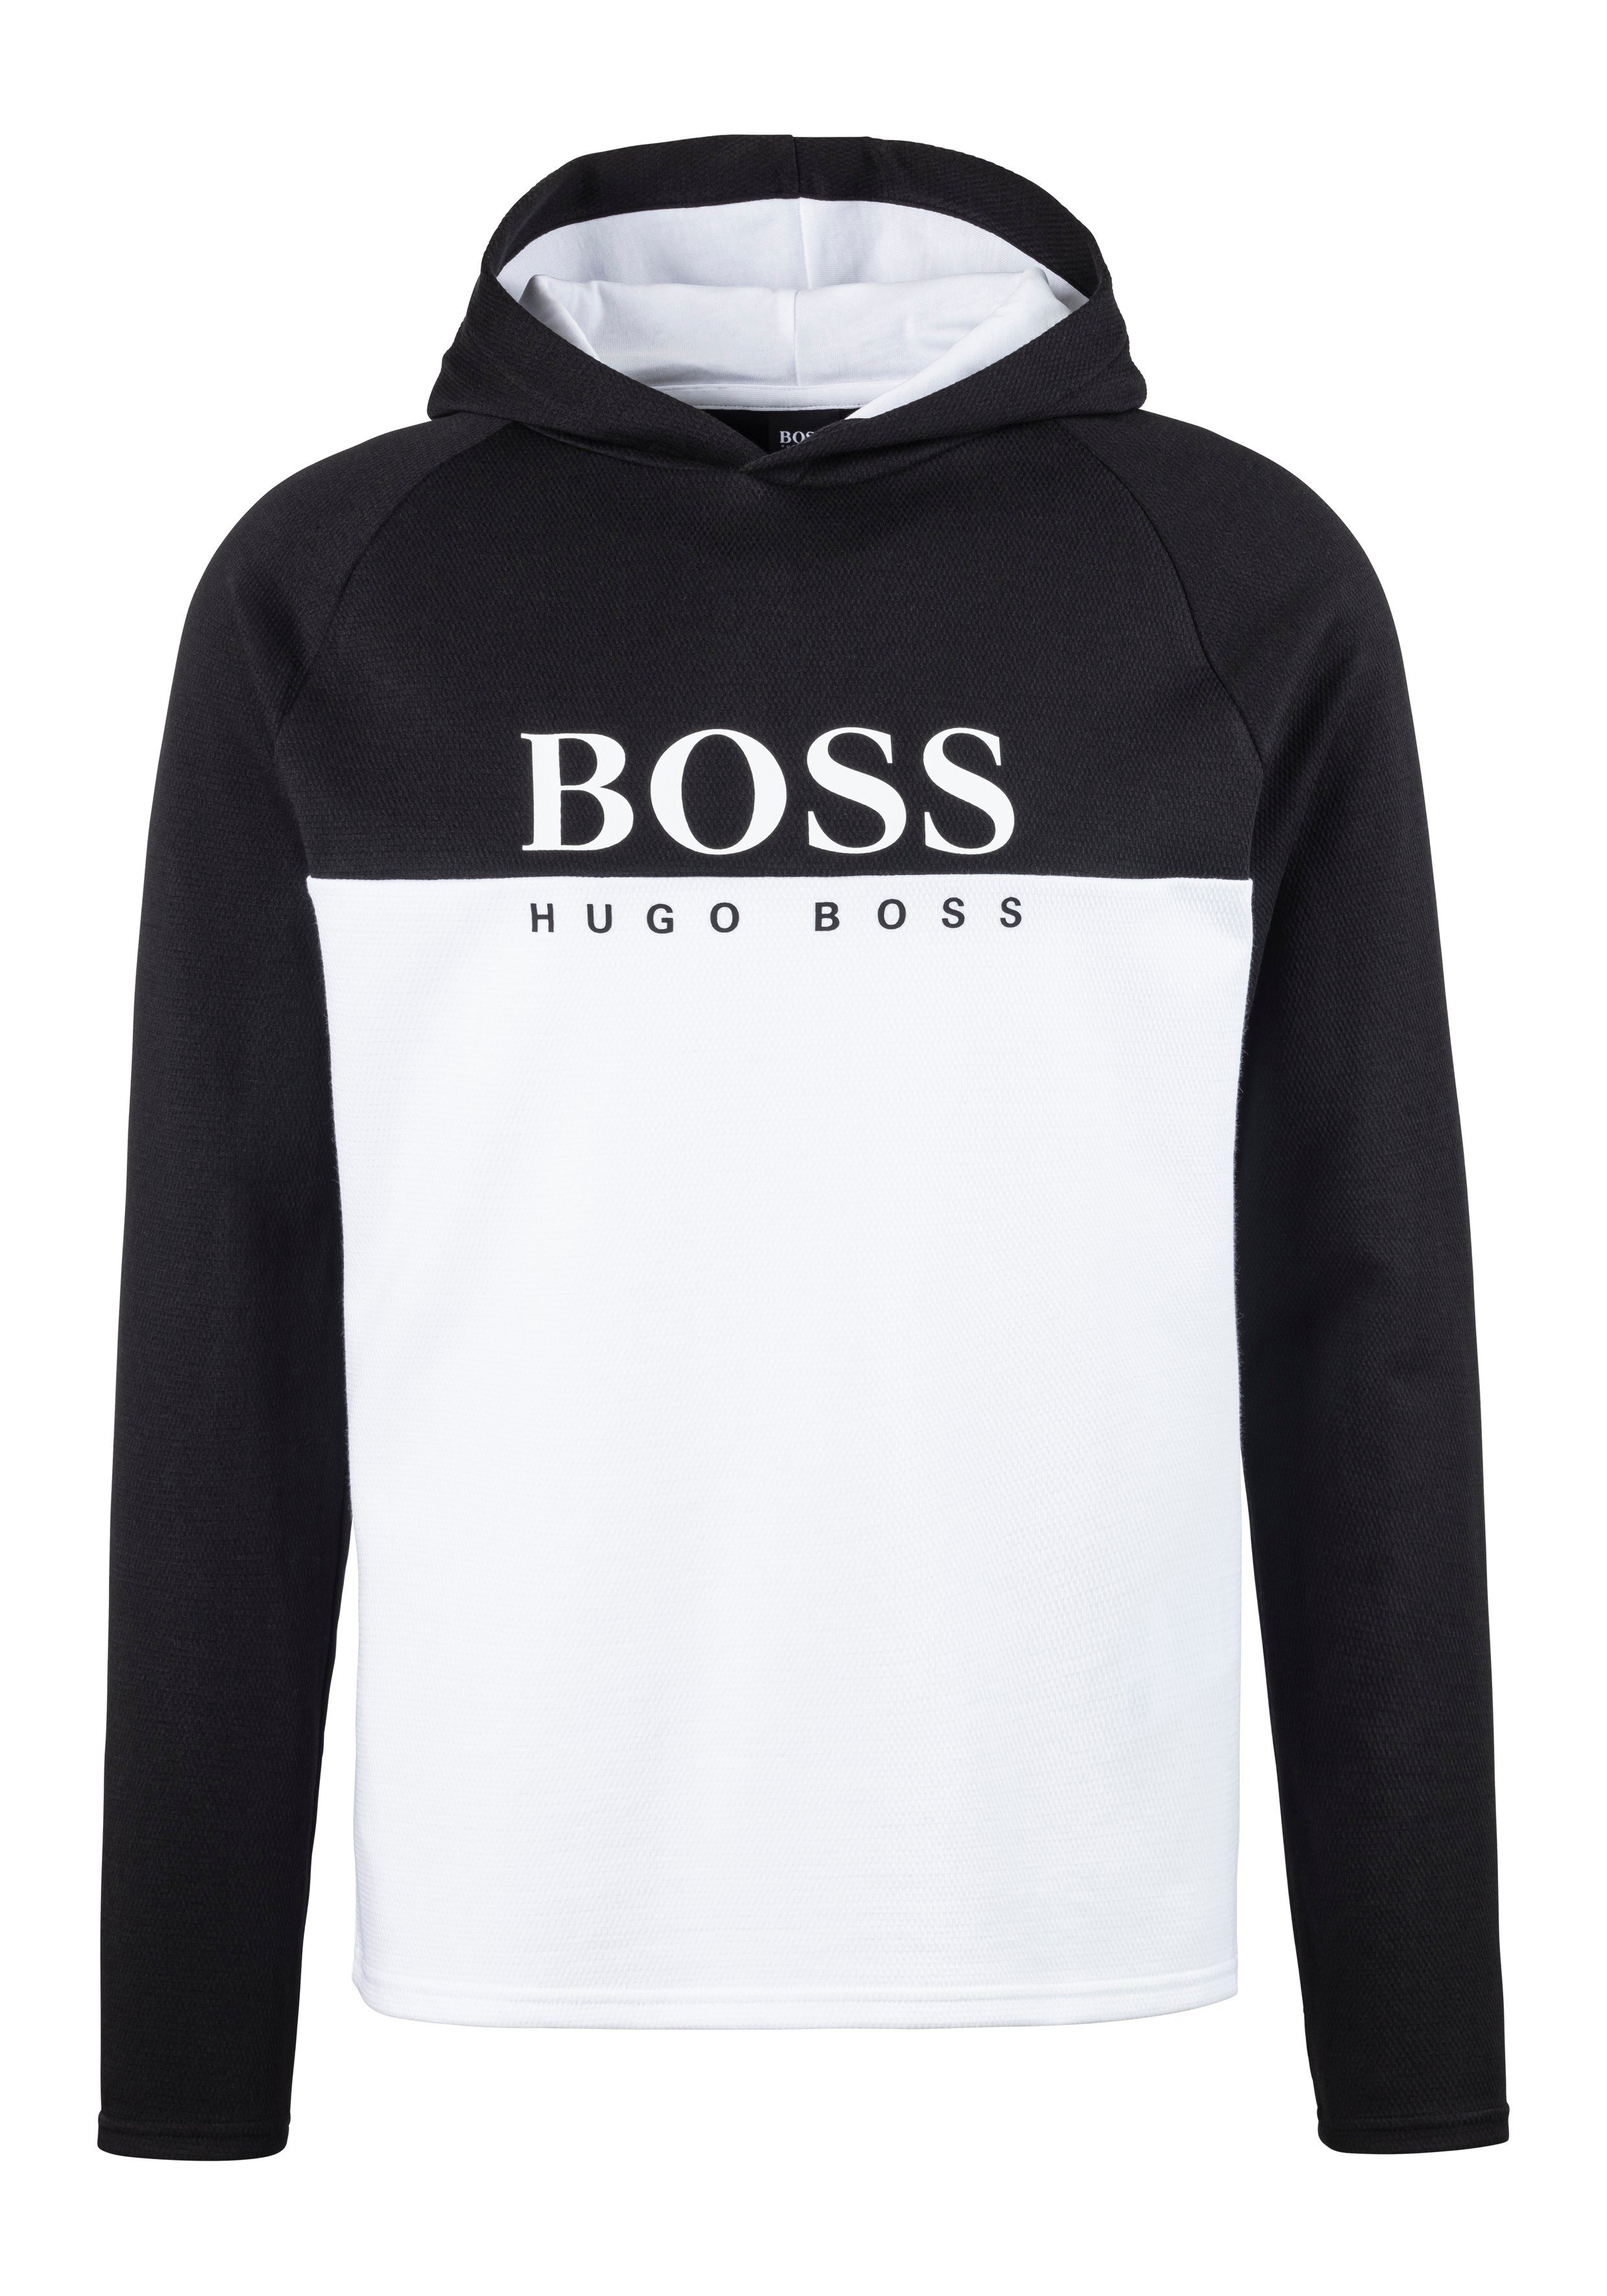 HUGO BOSS Herren Pullover online kaufen | OTTO